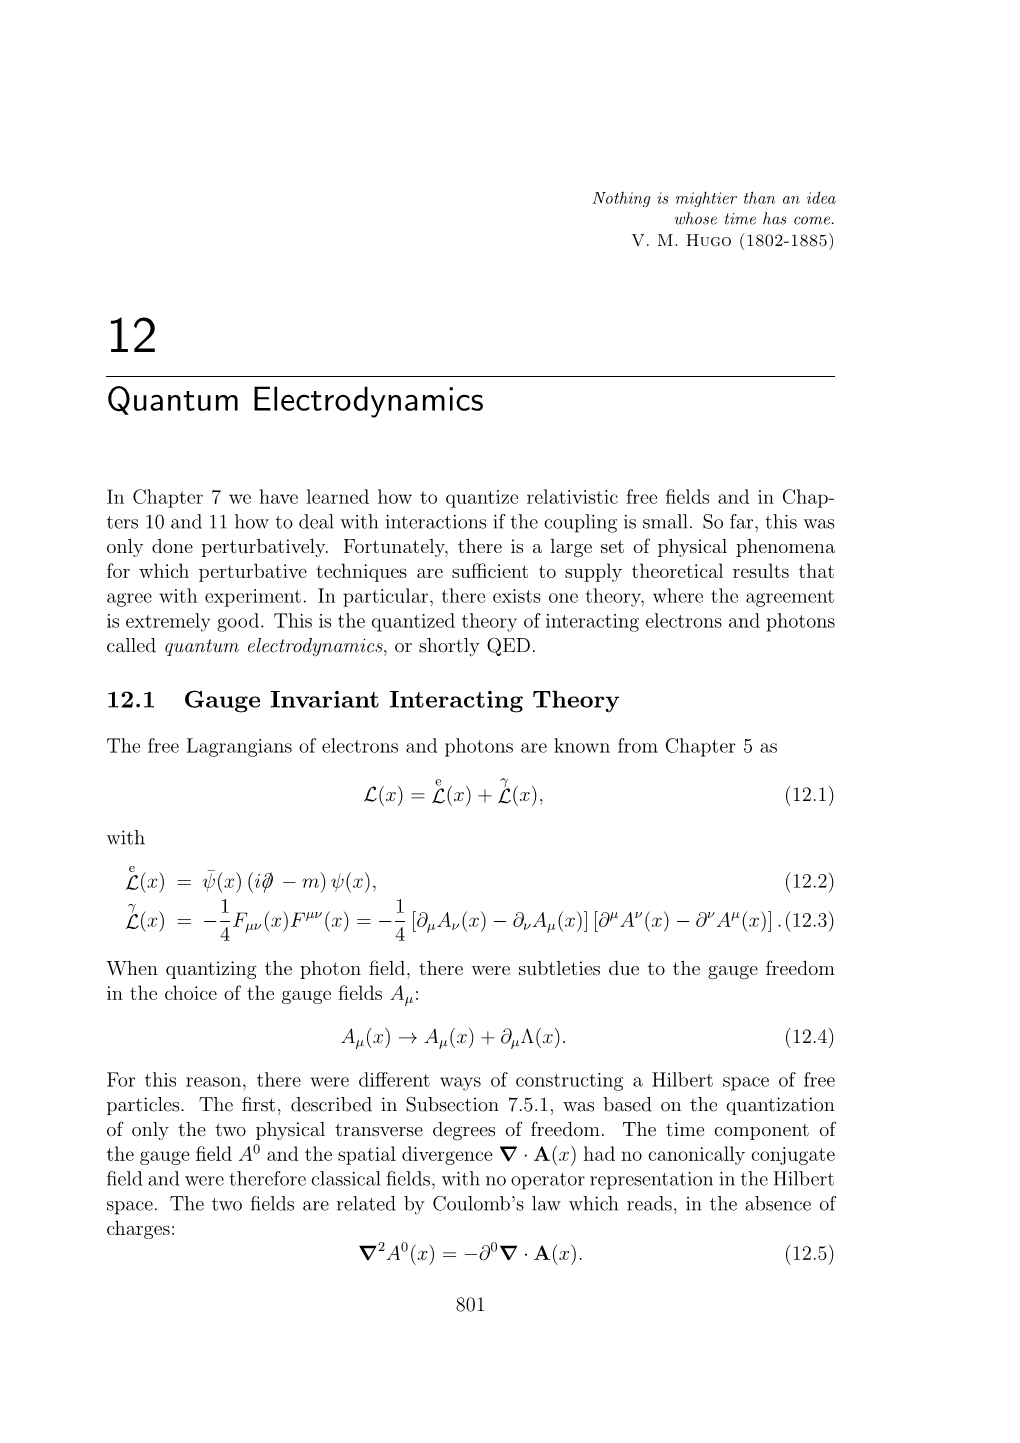 12 Quantum Electrodynamics